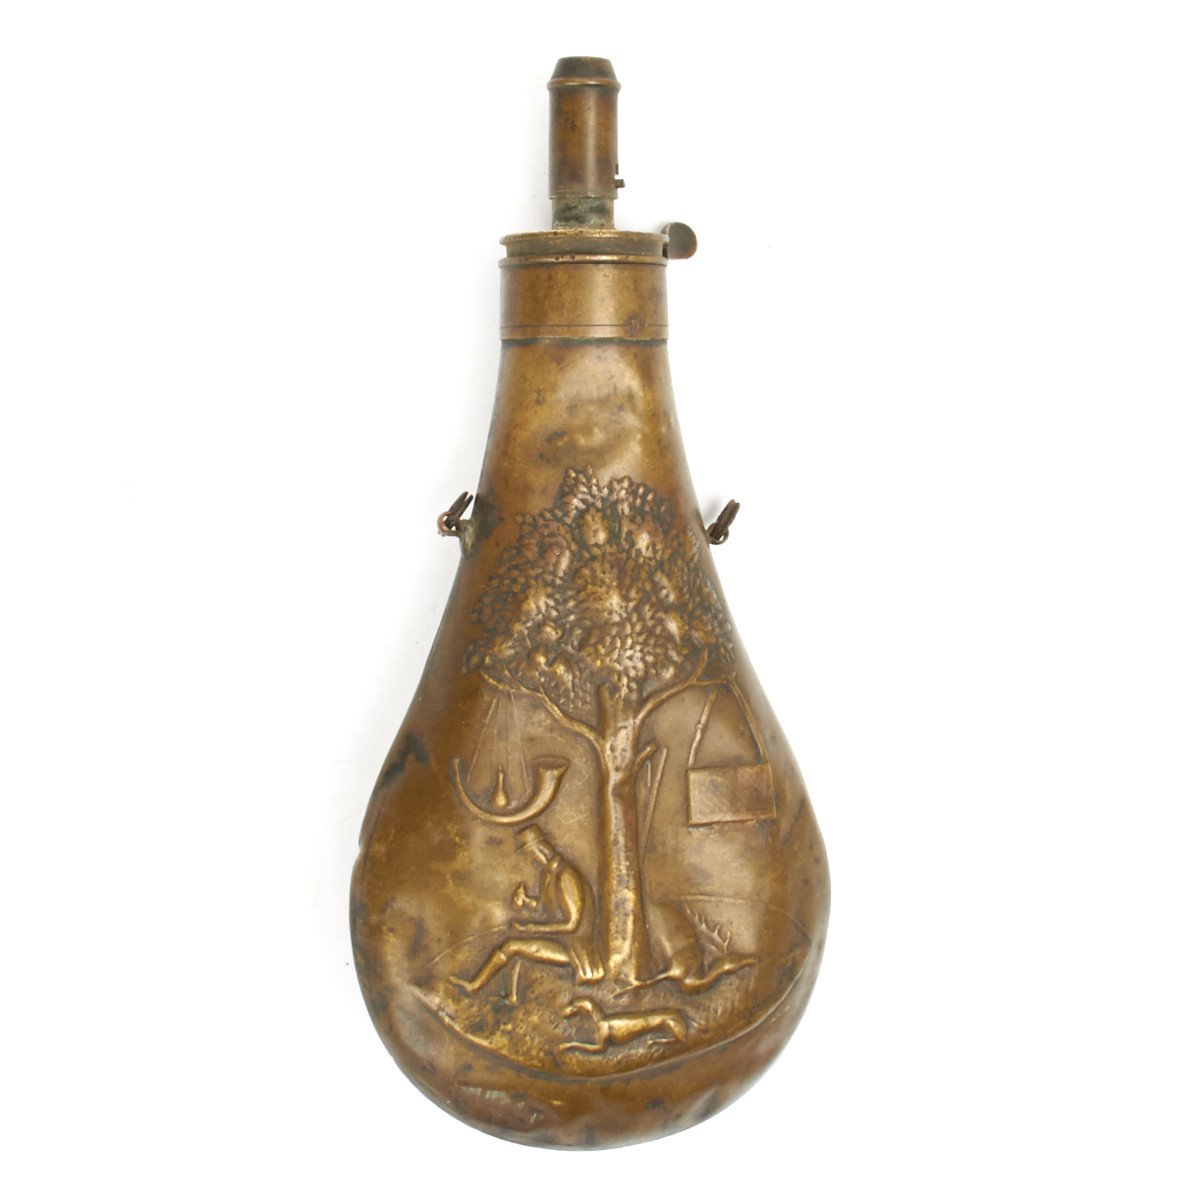 Original British Early 19th Century Brass Powder Flask with